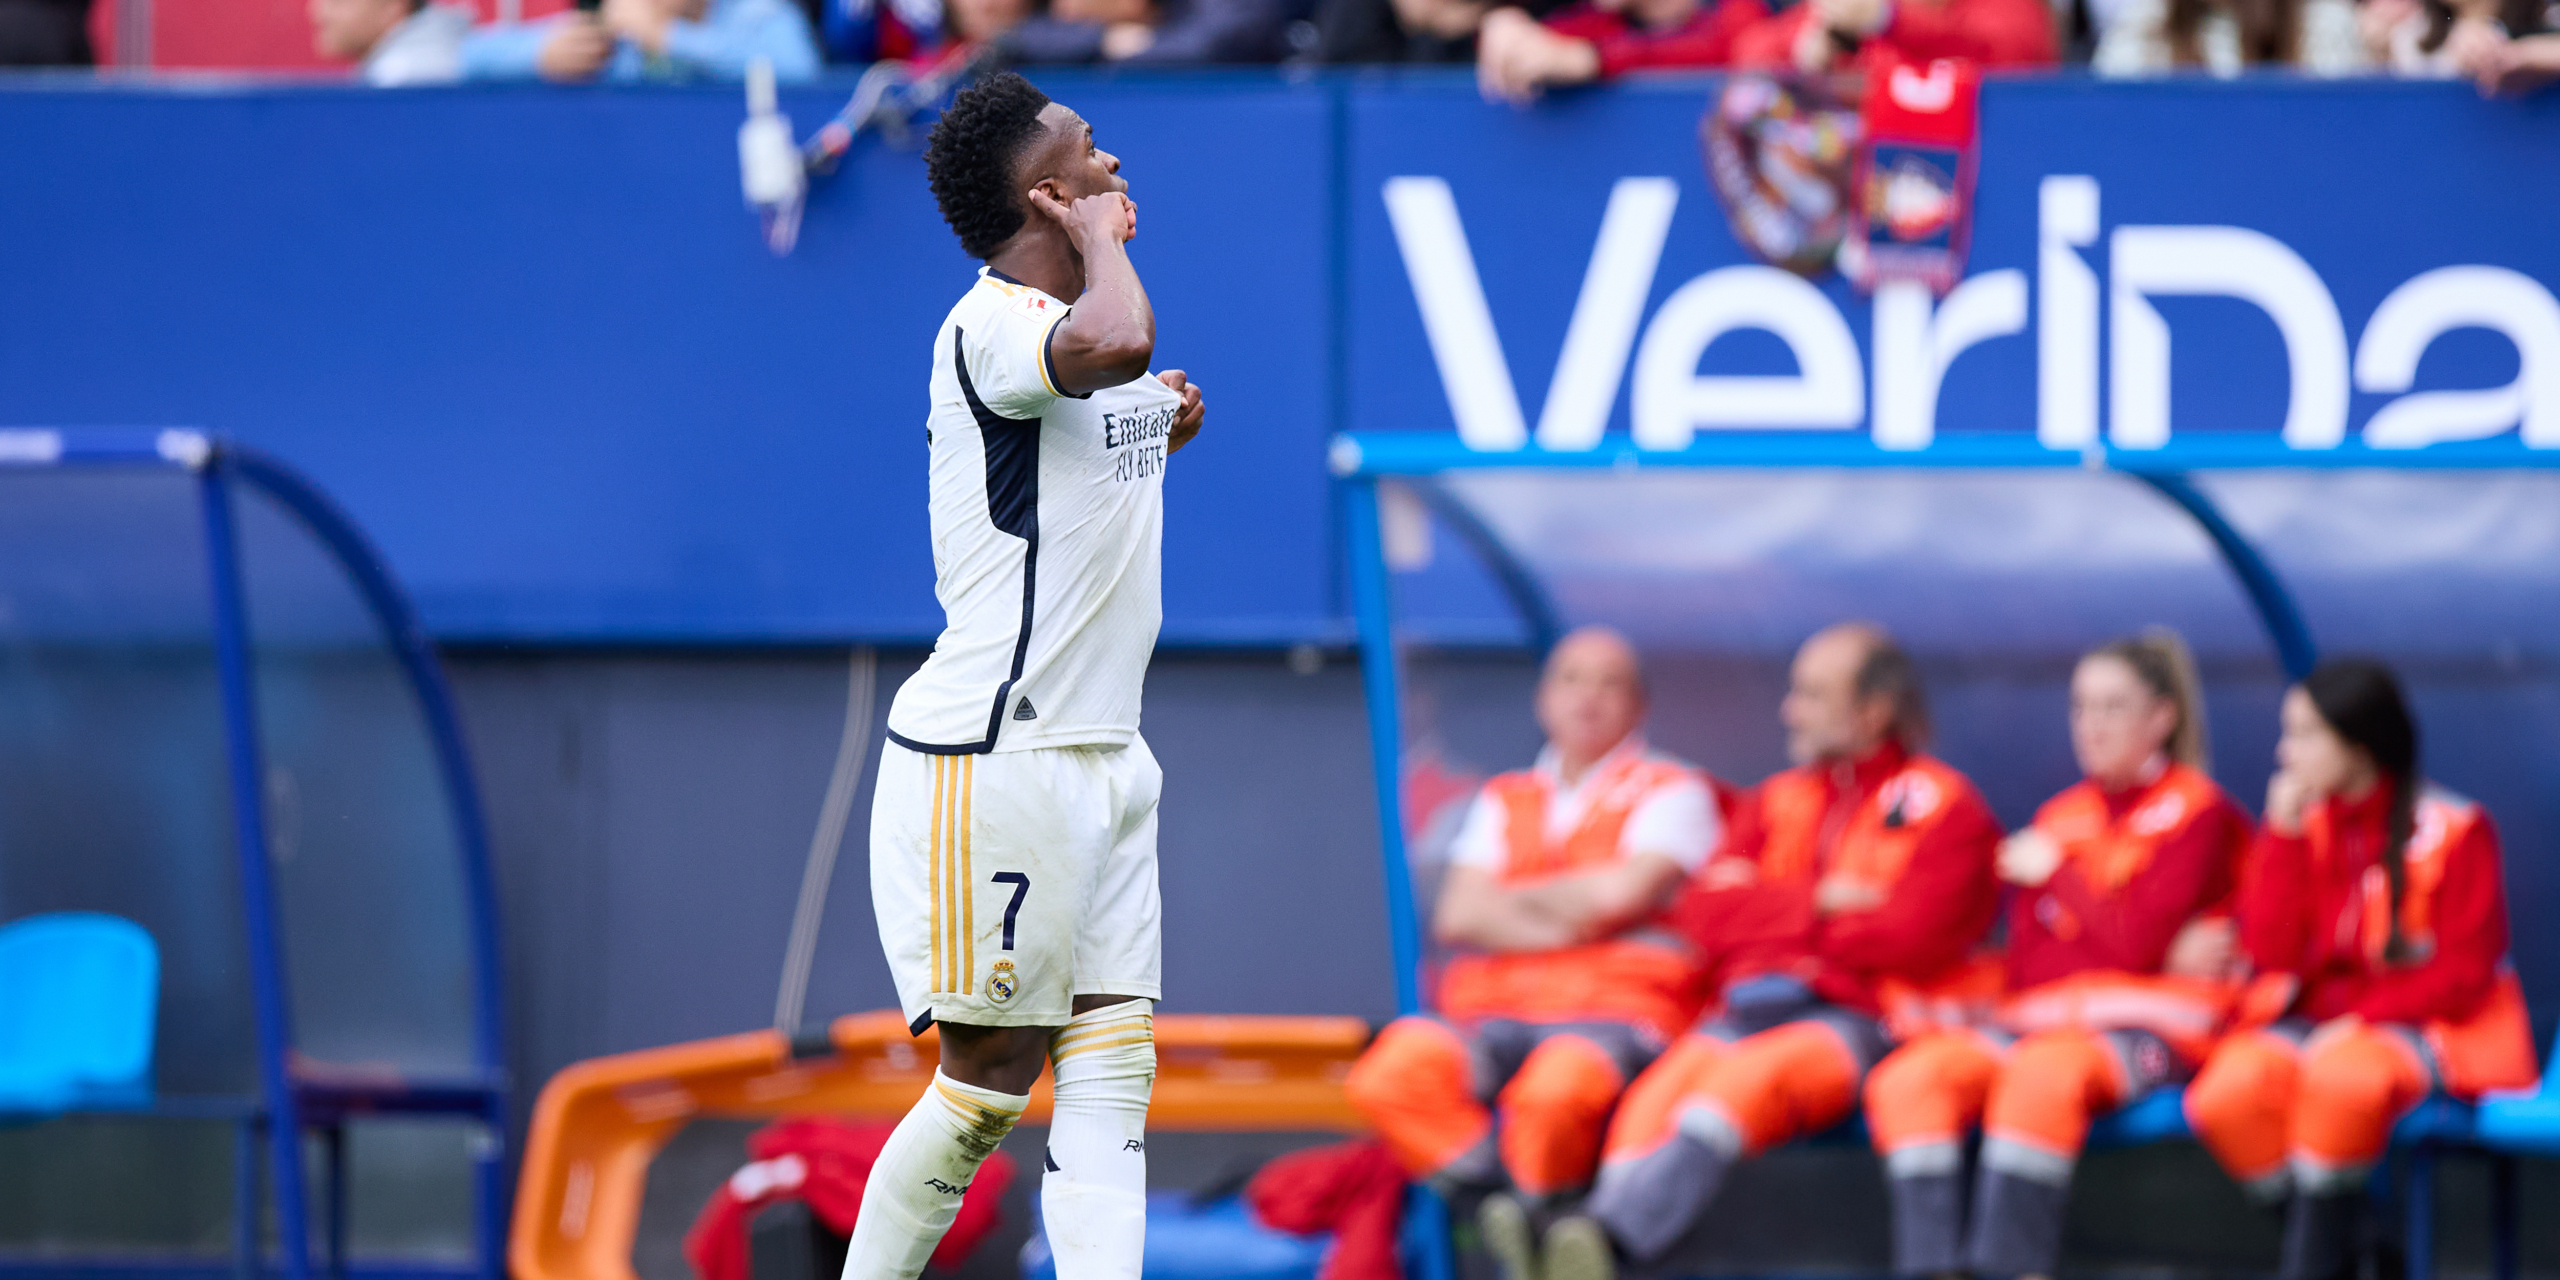 Vinicius, provocando a la afición de Osasuna después de marcar un gol | Europa Press